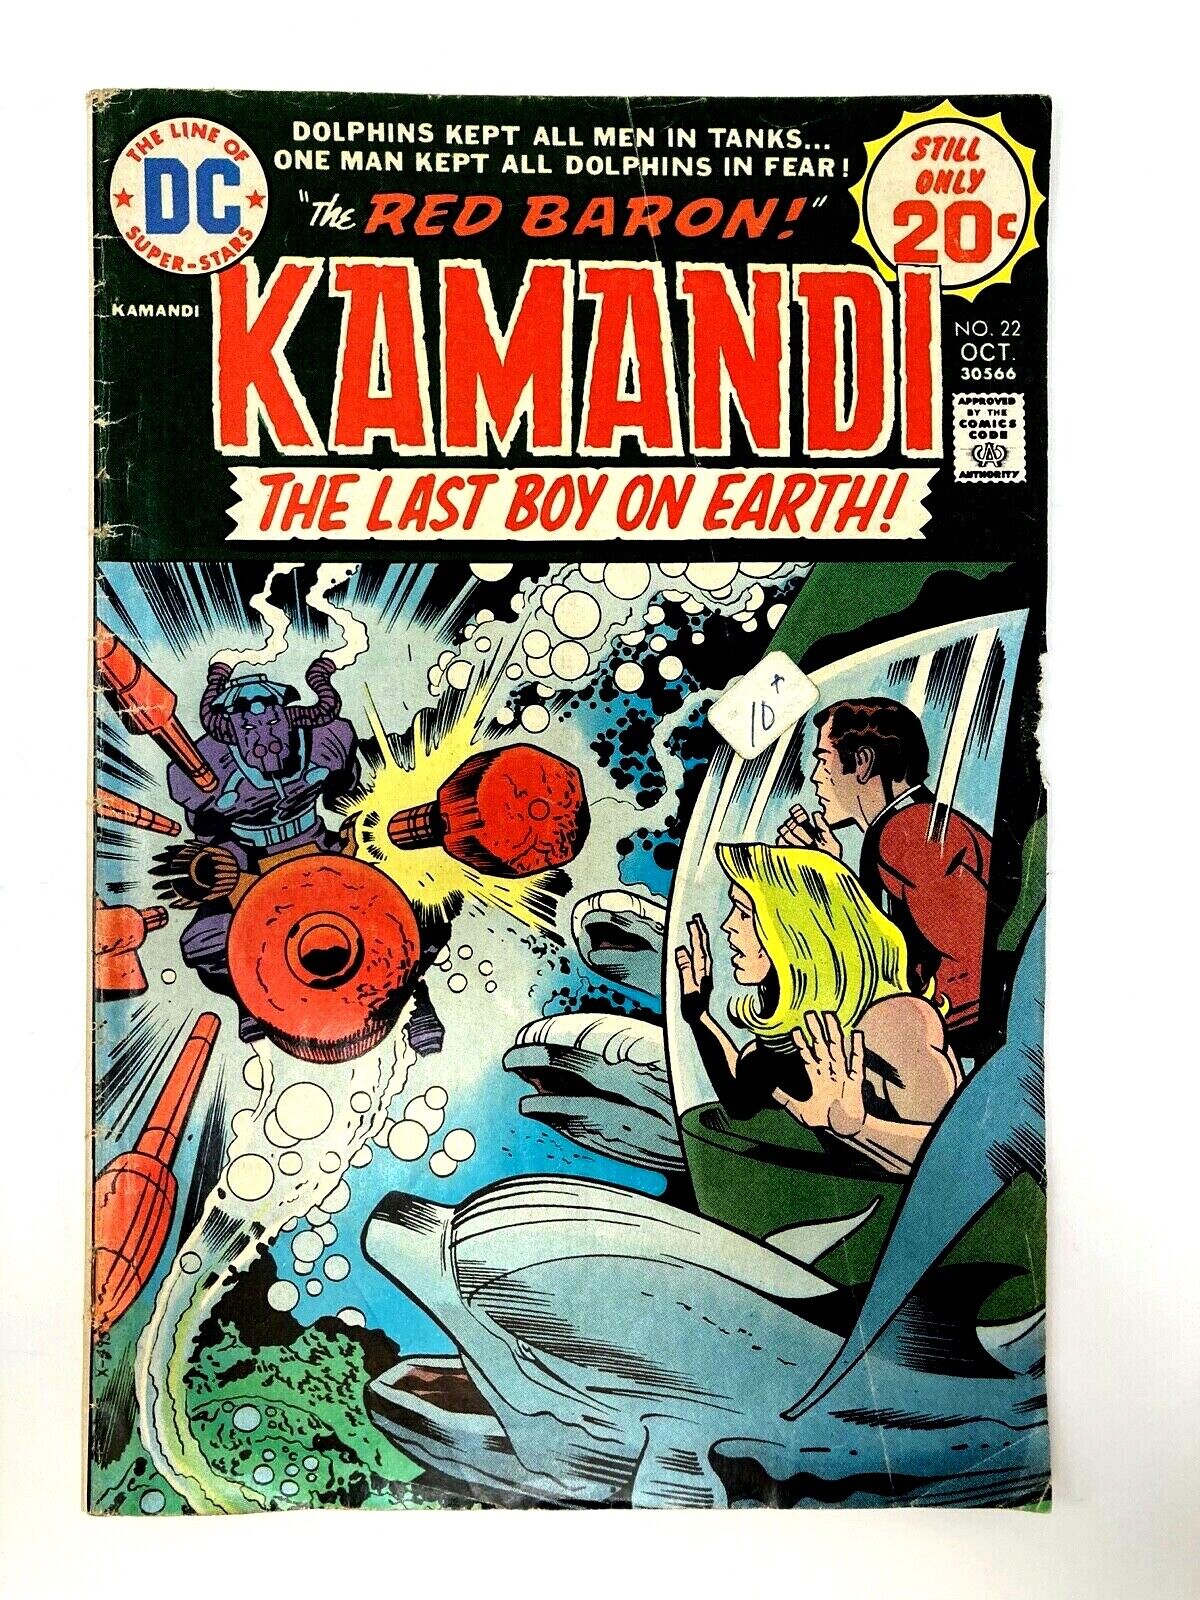 DC Comics Kamandi, The Last Boy on Earth No. 22 Oct